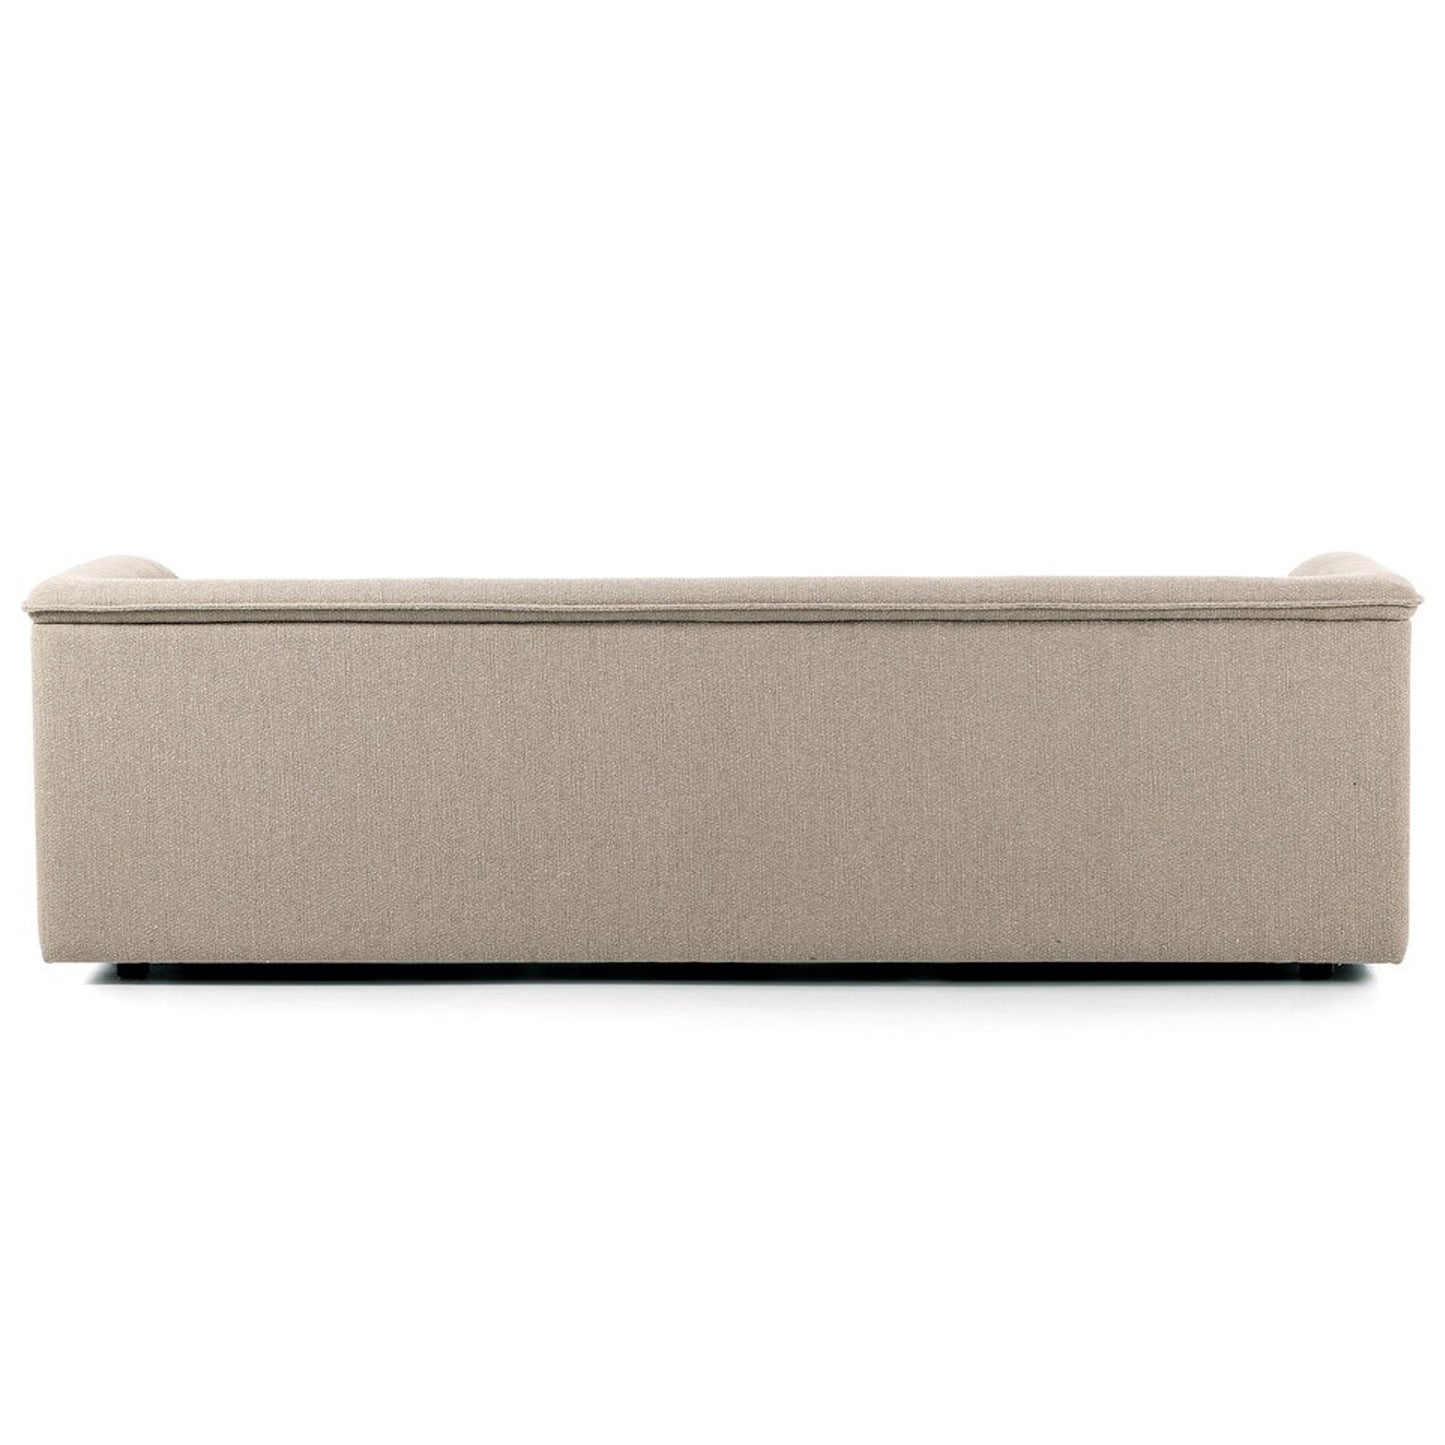 Bea Modern Fabric Sofa – 4 Seater - IONS DESIGN